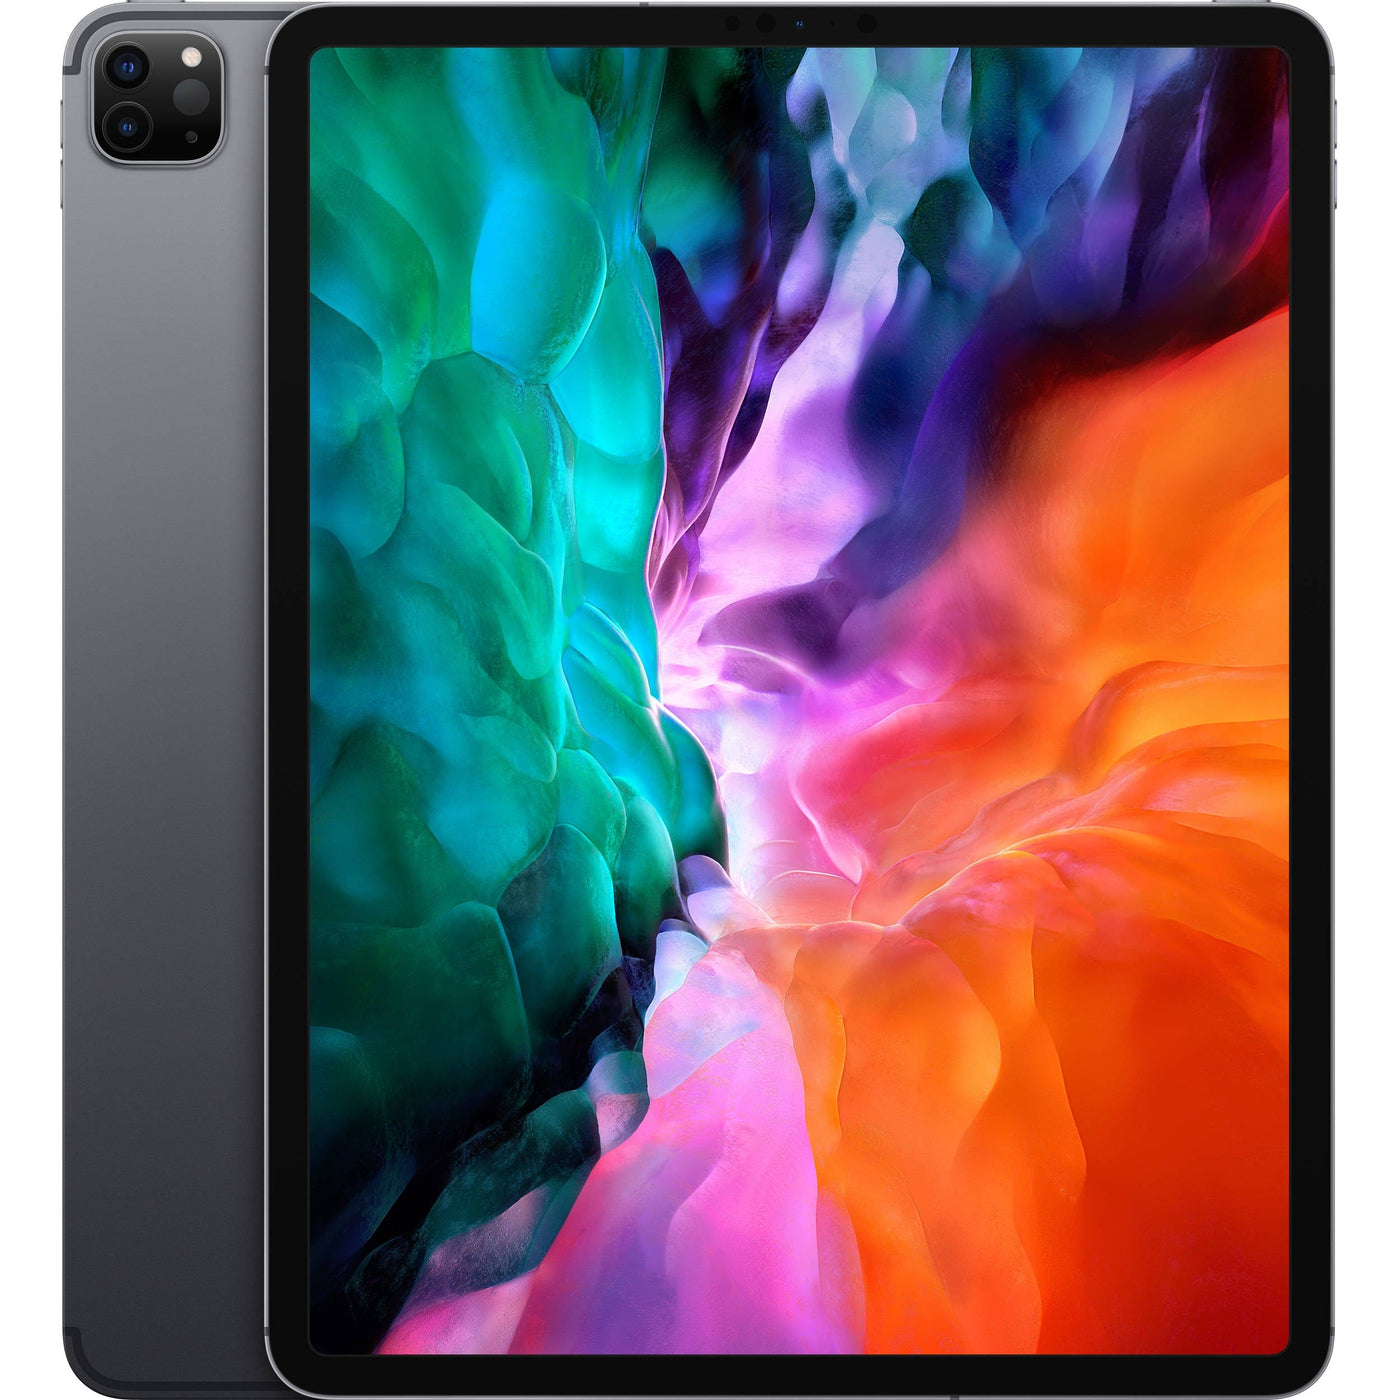 Apple iPad Space Grey / 128GB iPad Pro 12.9-inch (4th Generation, Wi-Fi) - Excellent